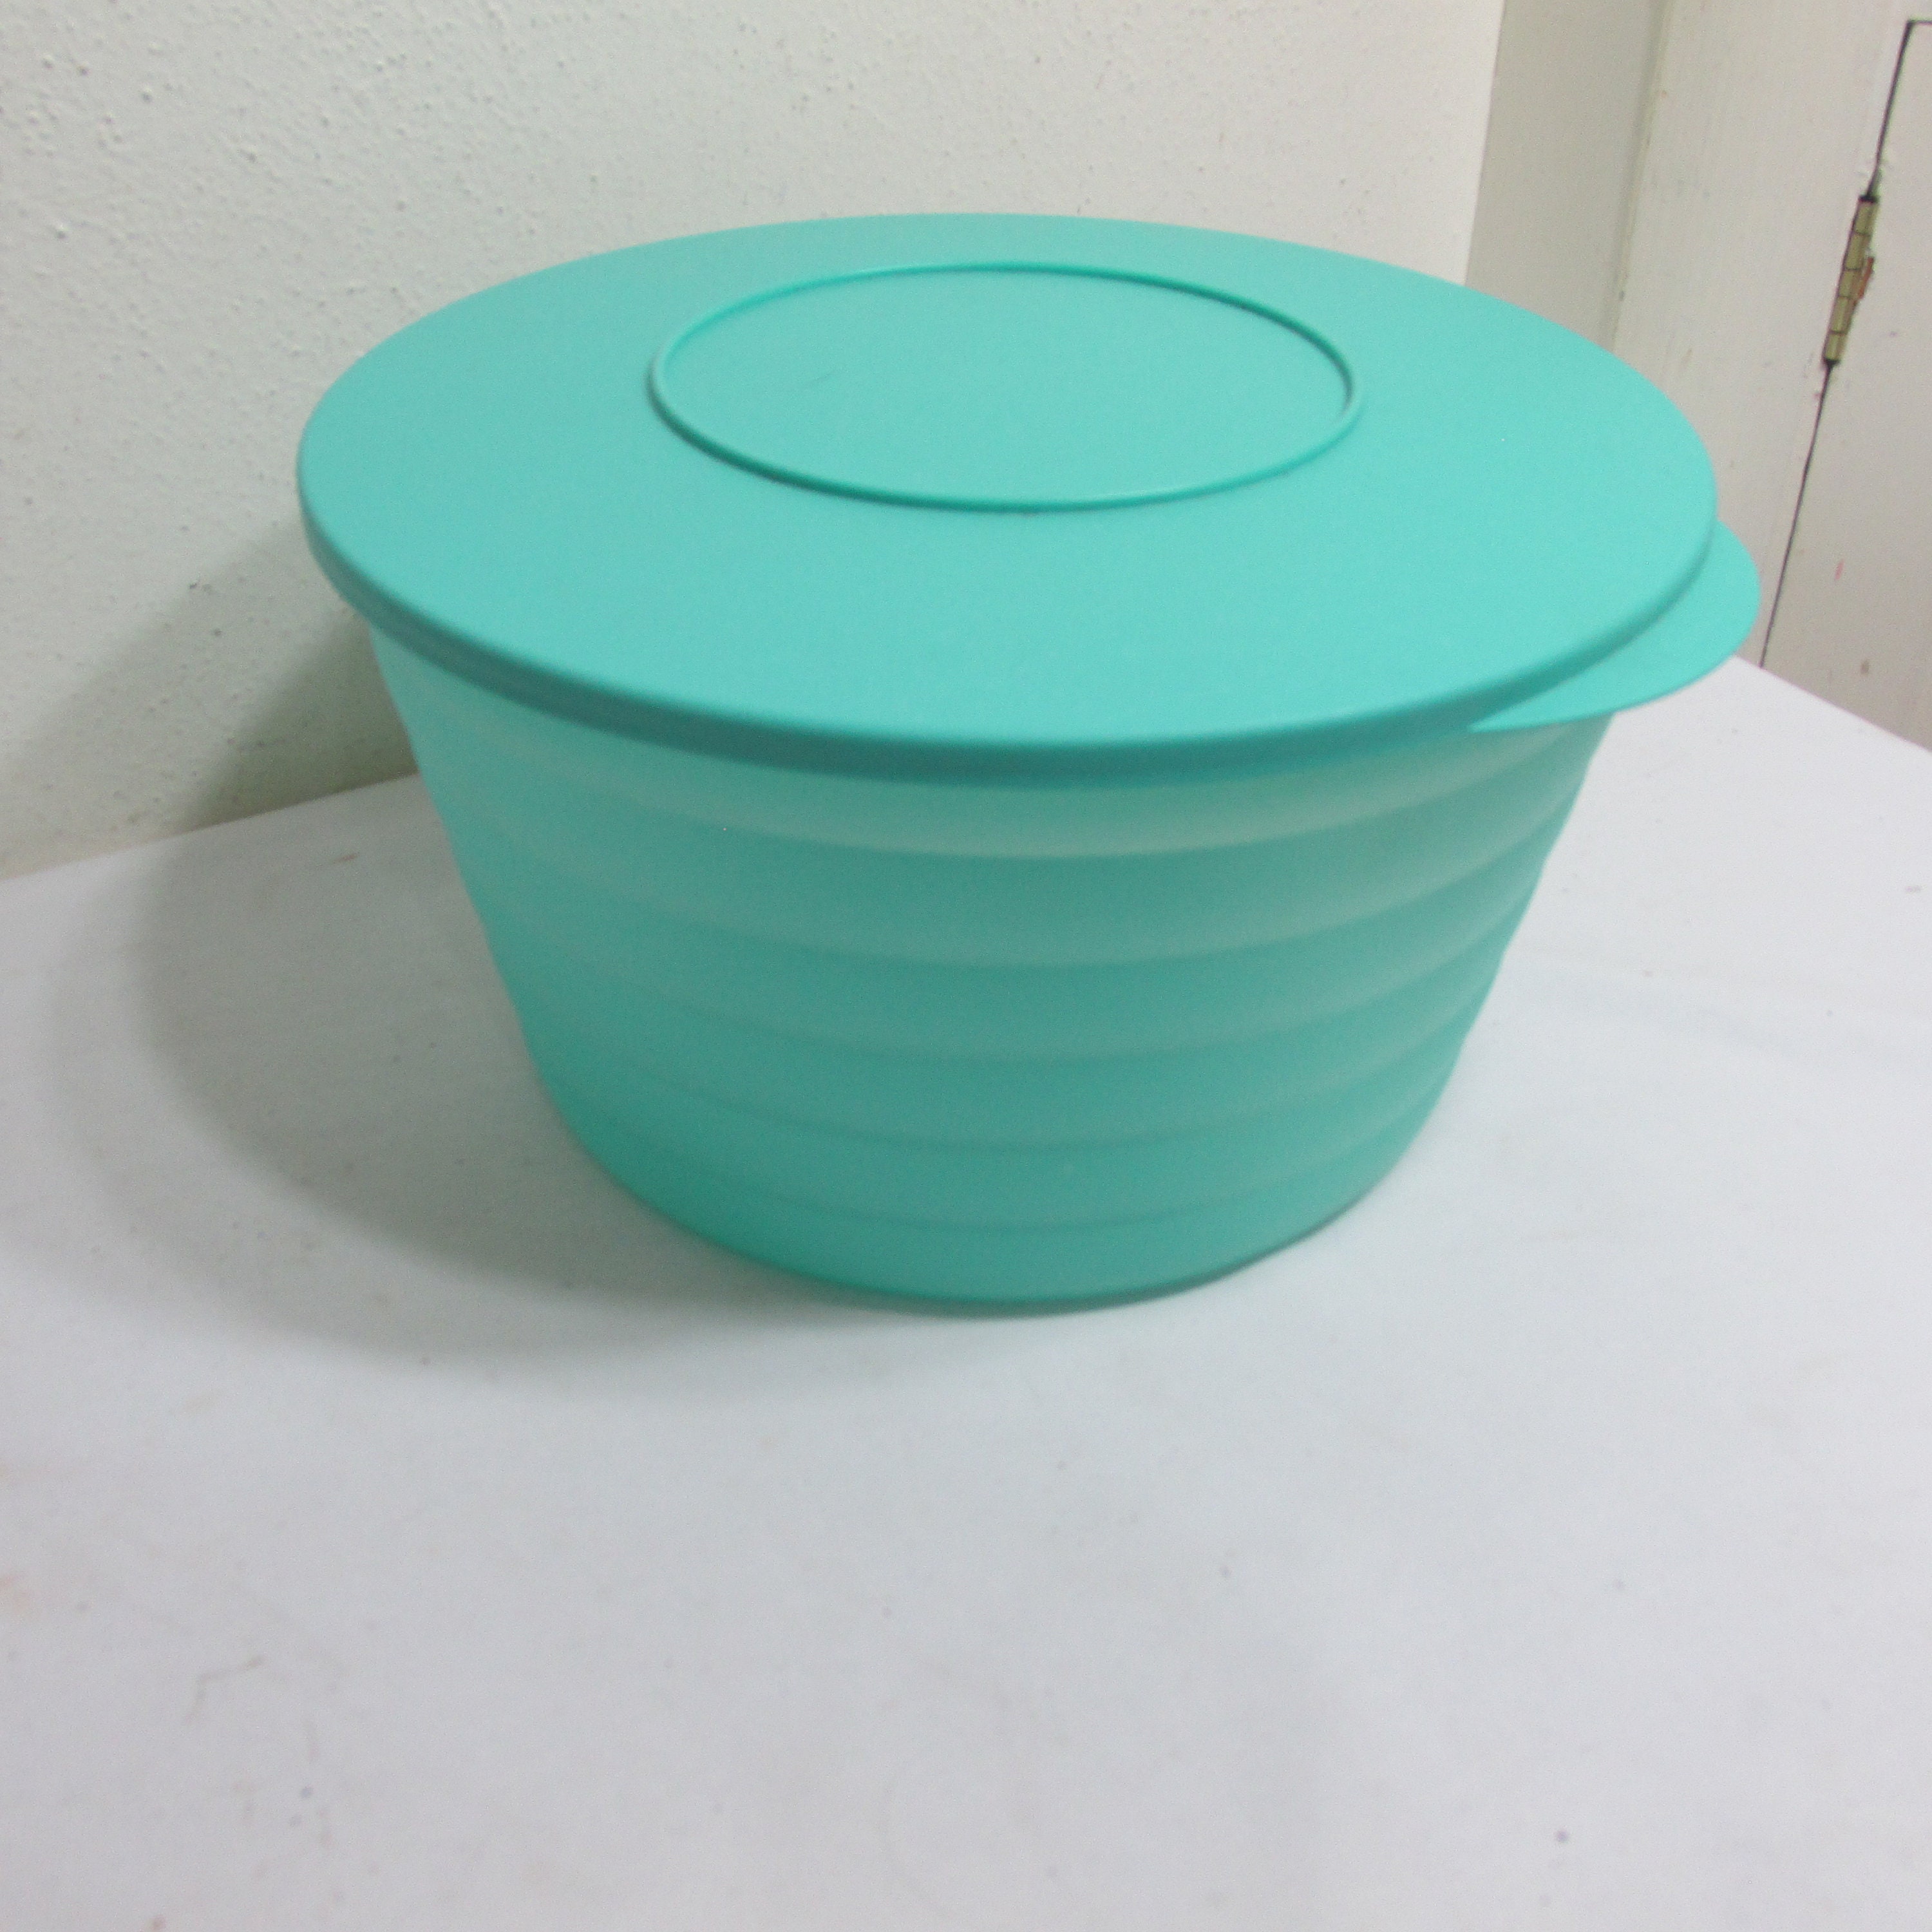 Tupperware Big Wonder Bowls Large Clear 3-cup Set of 4 w/Tokyo Blue Seals